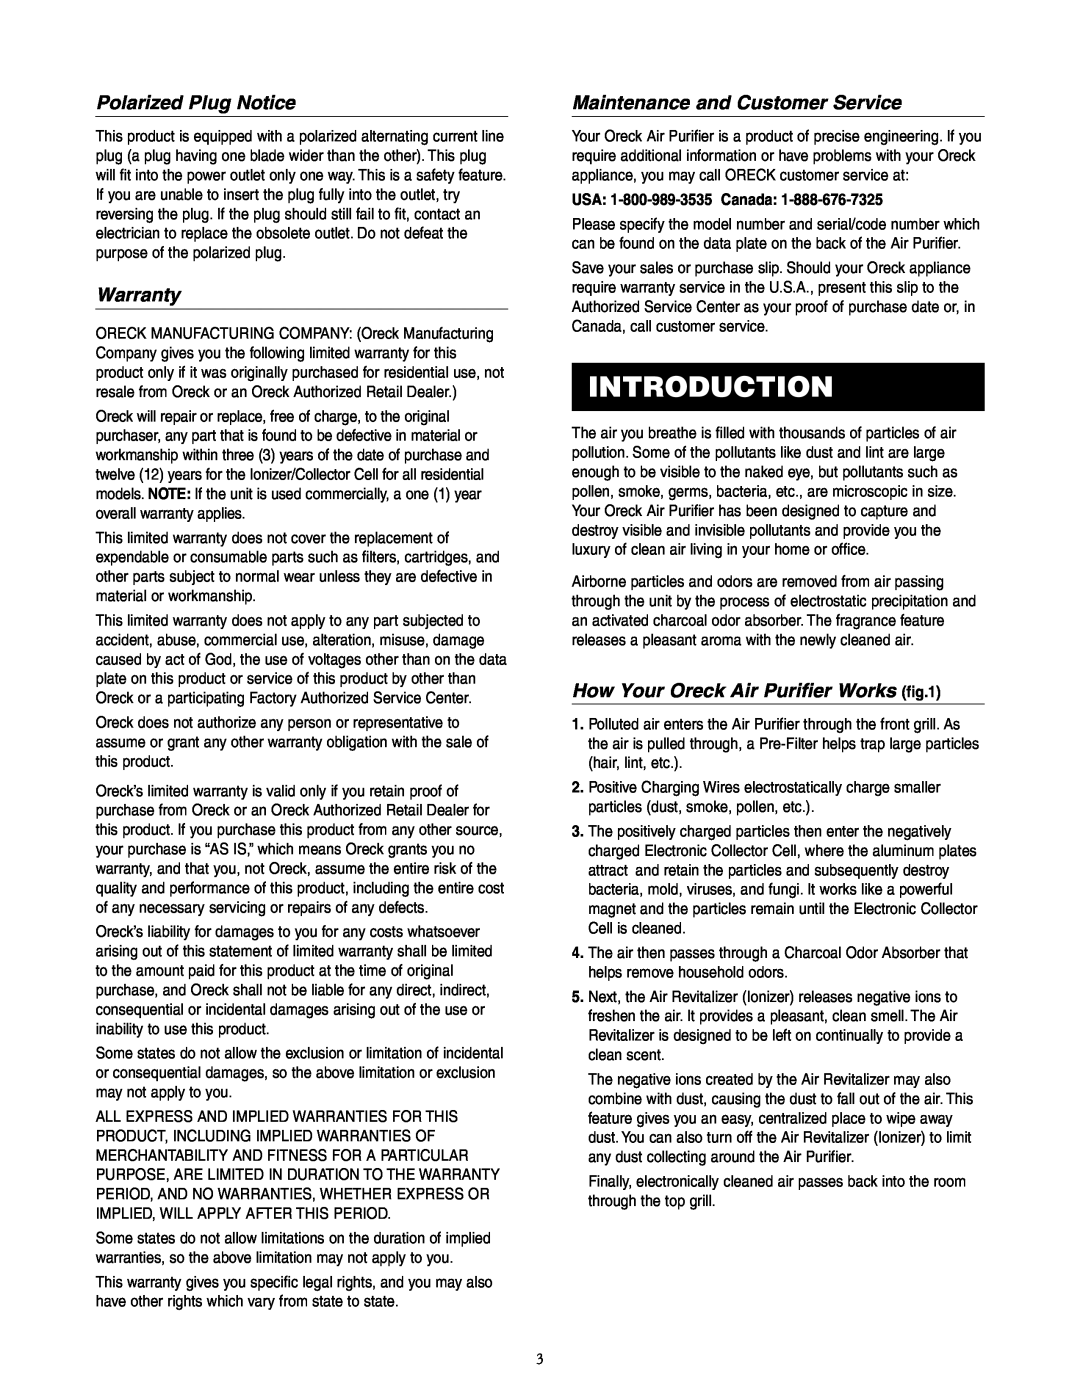 Oreck 3323-8889REVK manual Introduction, Polarized Plug Notice, Warranty, Maintenance and Customer Service 